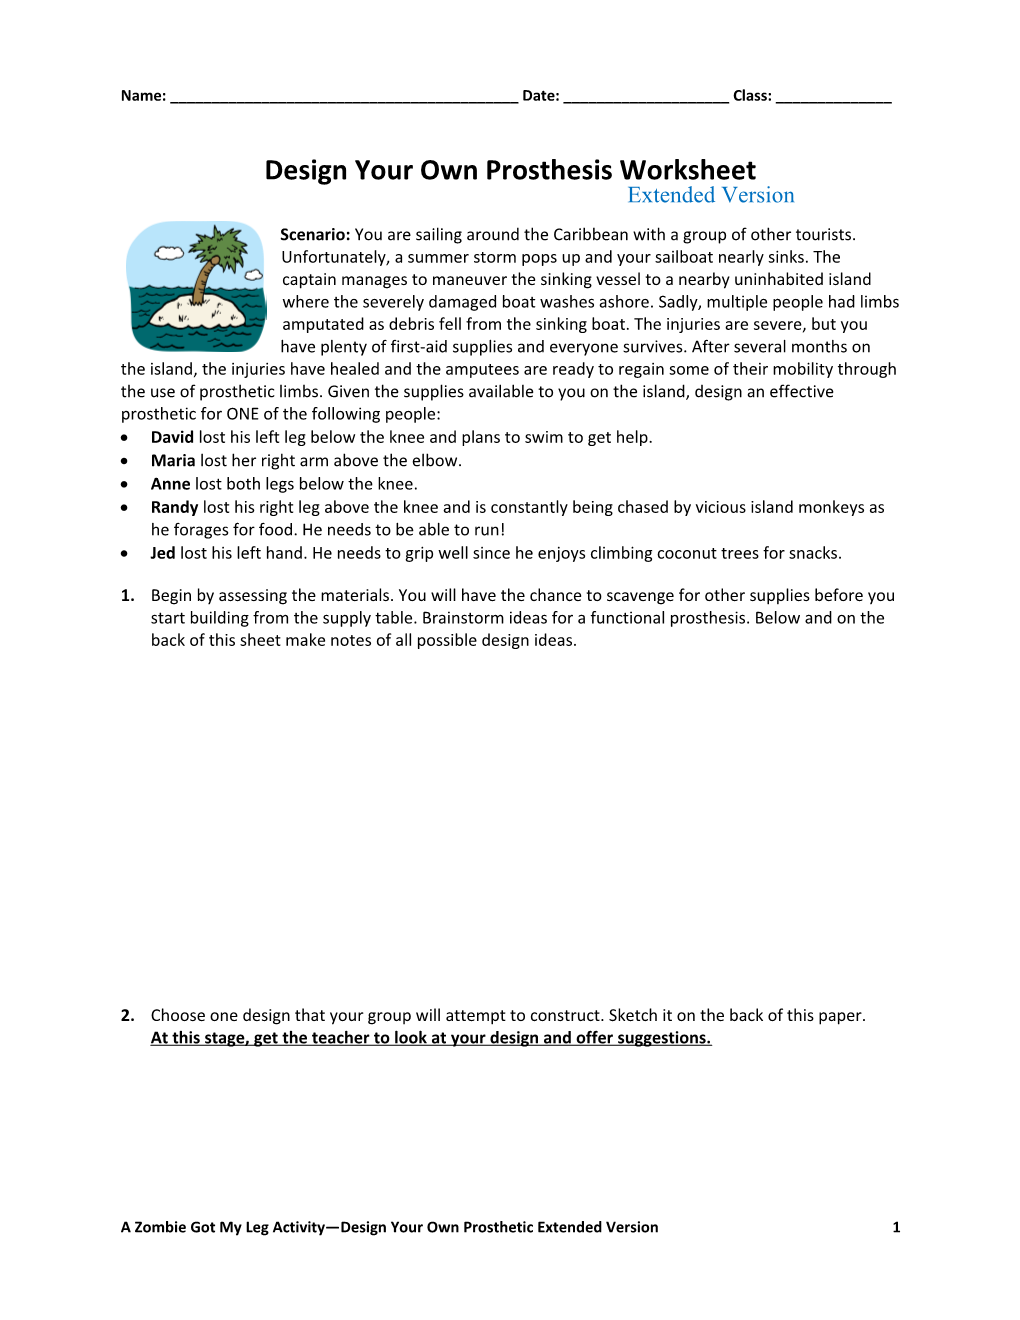 Design Your Own Prosthesis Worksheet